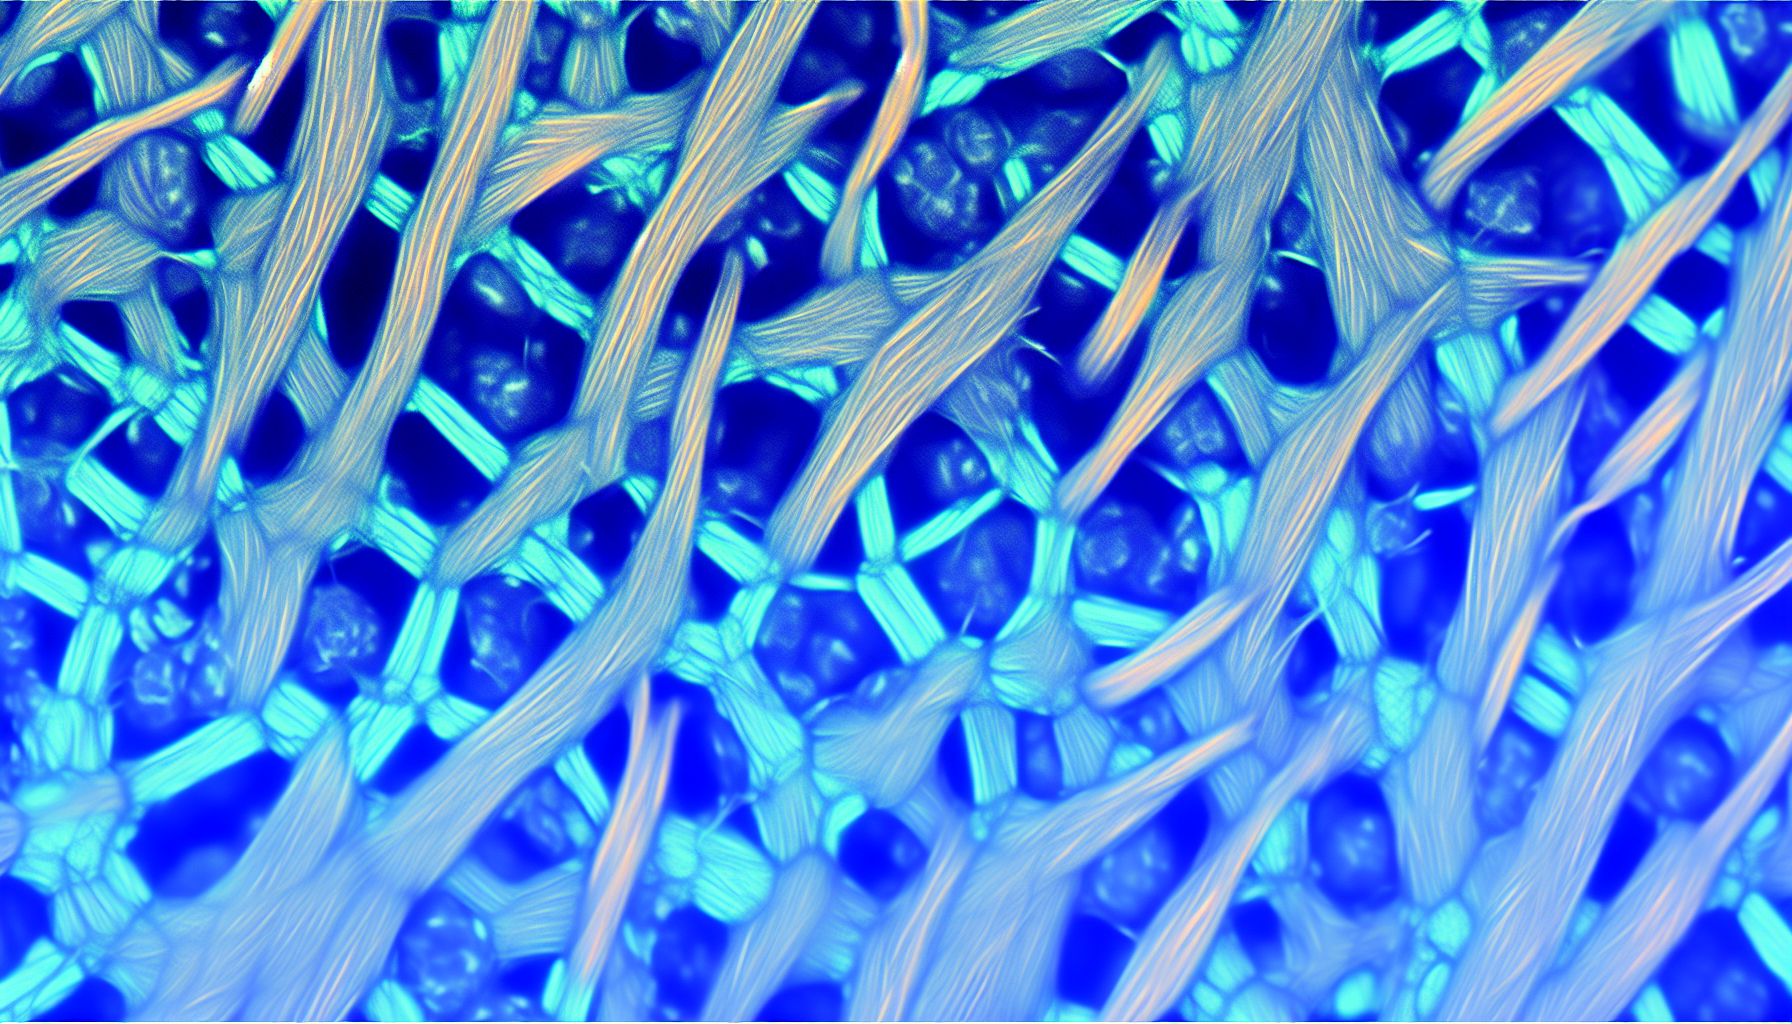 Collagen fibers under a microscope